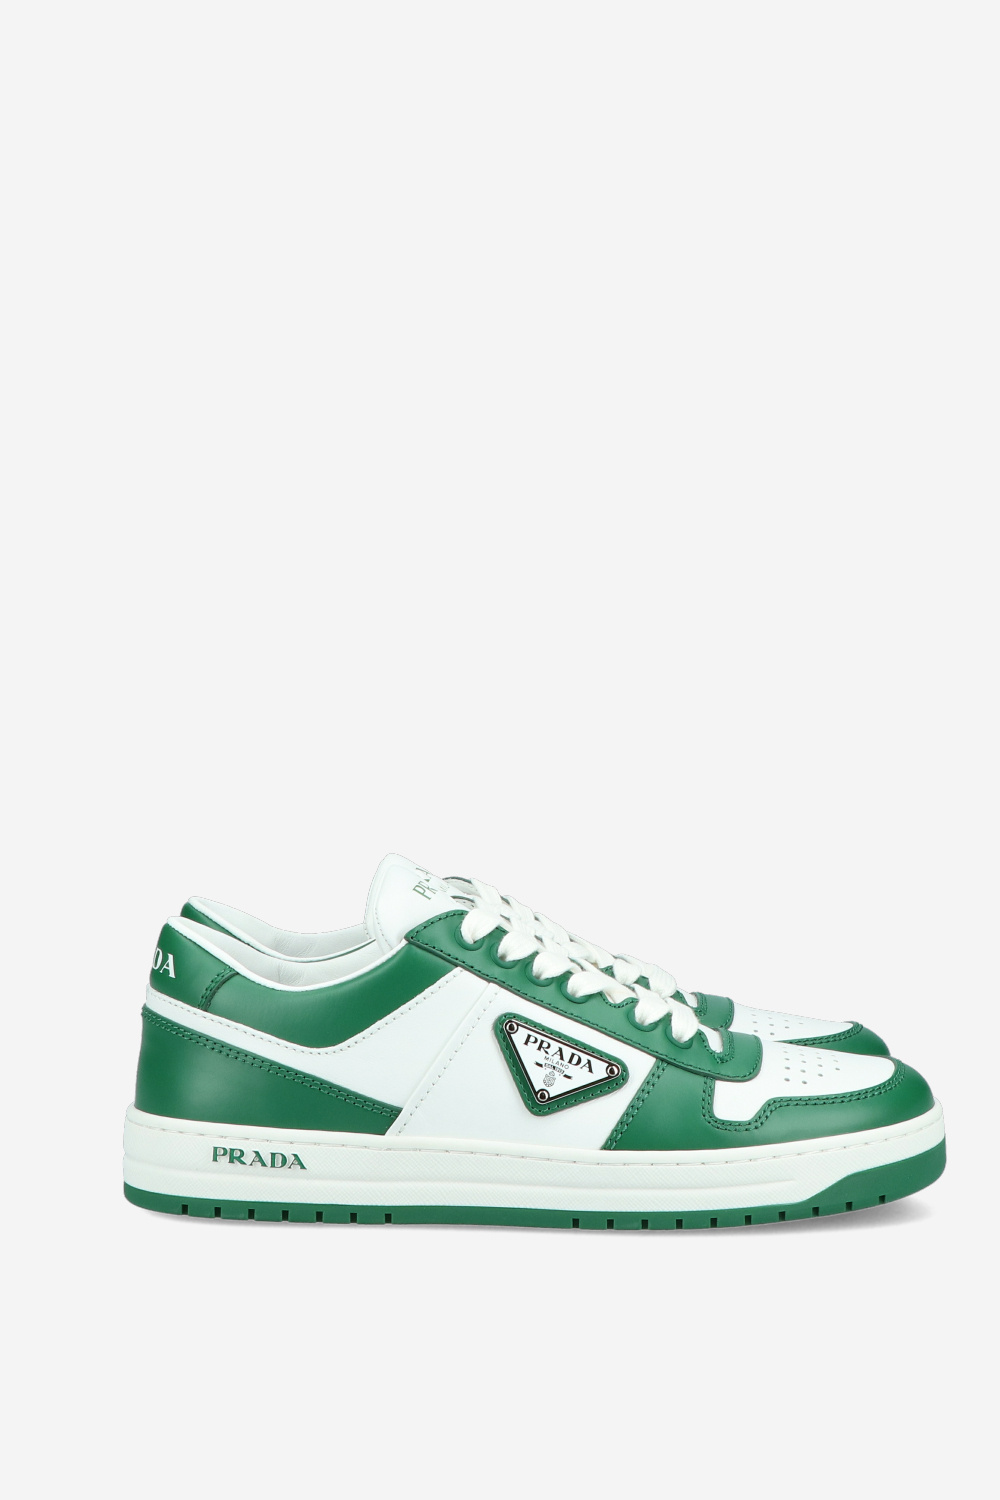 Prada Sneaker Green